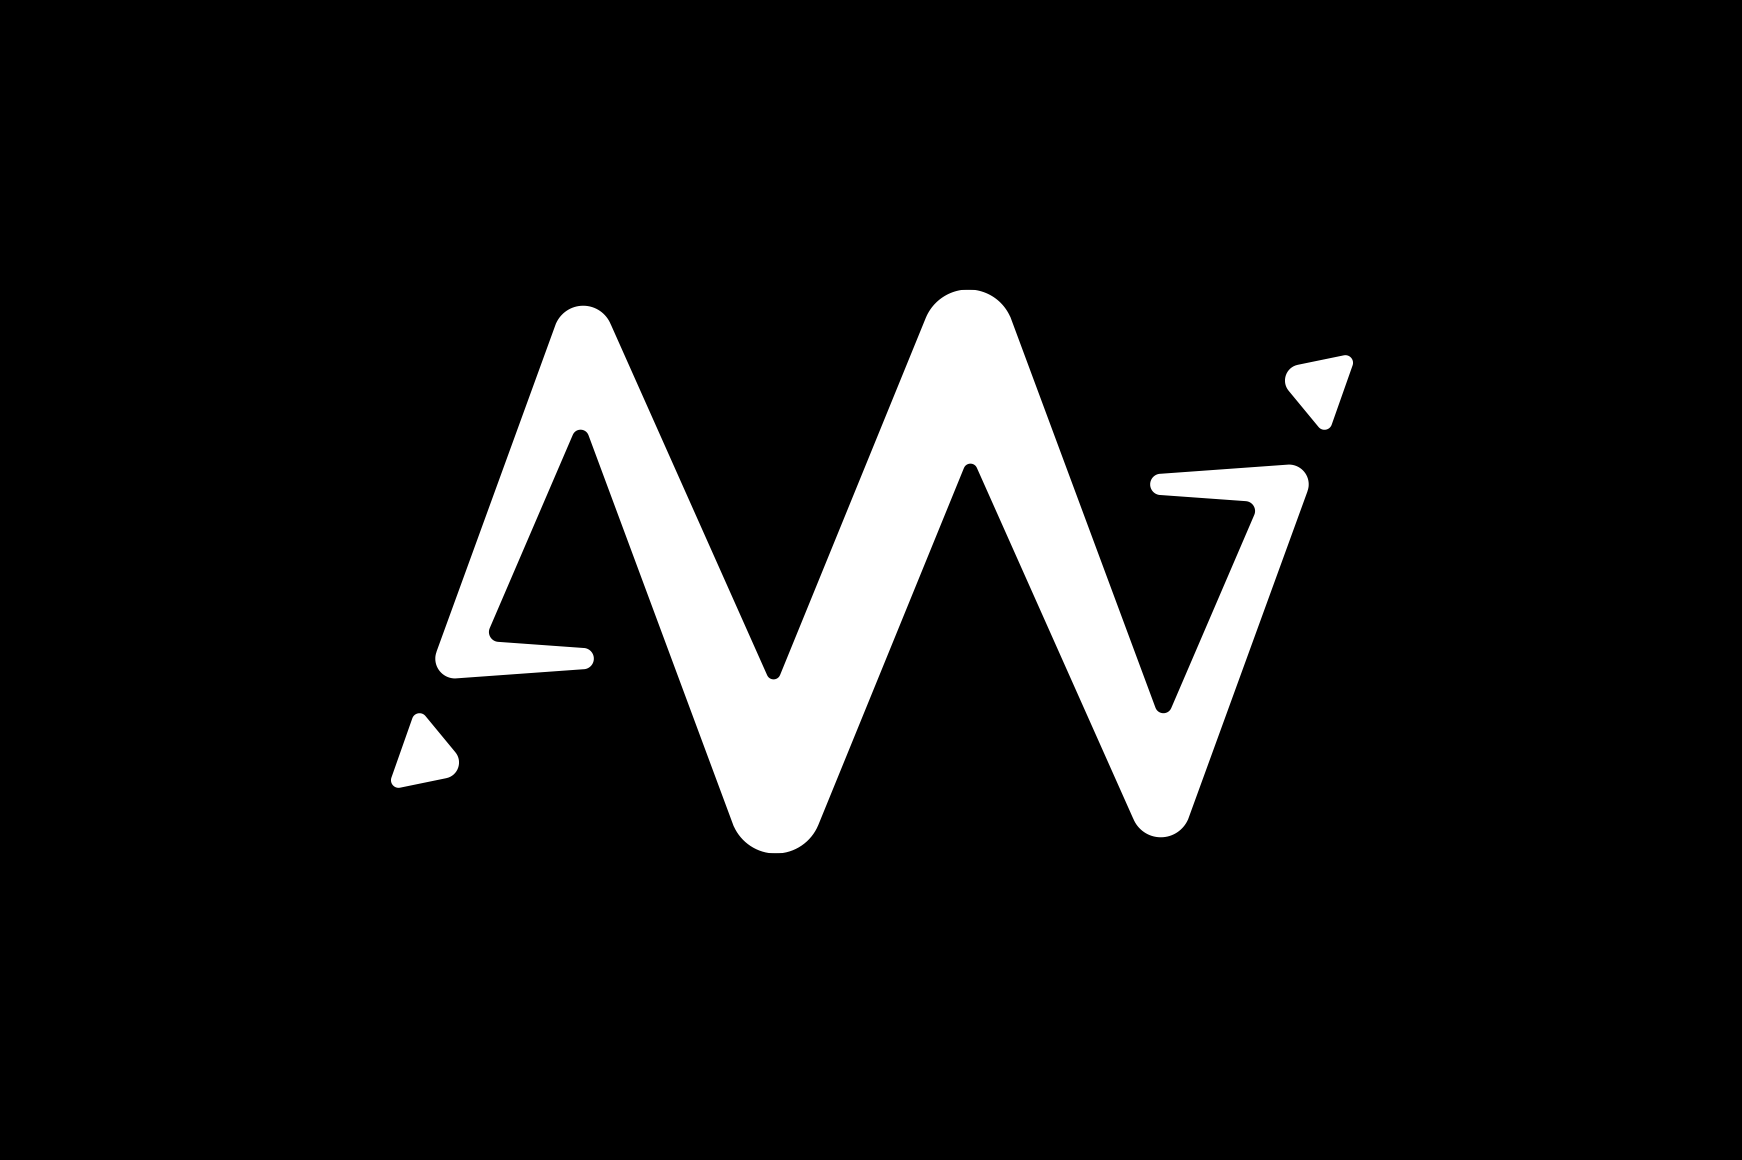 AMI Logo - Grid Pattern: Logo design and branding